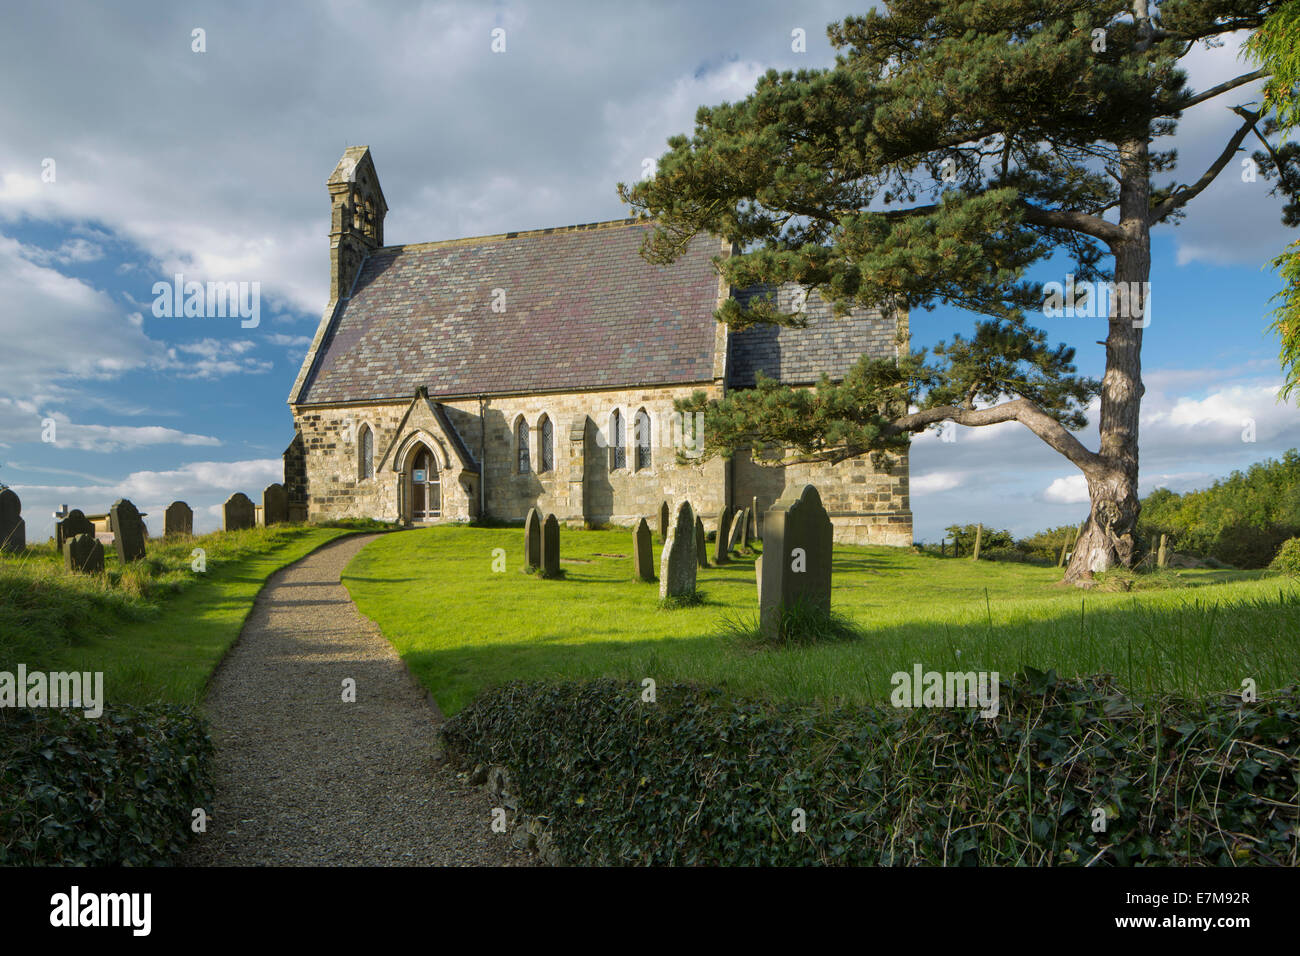 All Saints Church at Burythorpe, East Yorkshire, England. Stock Photo